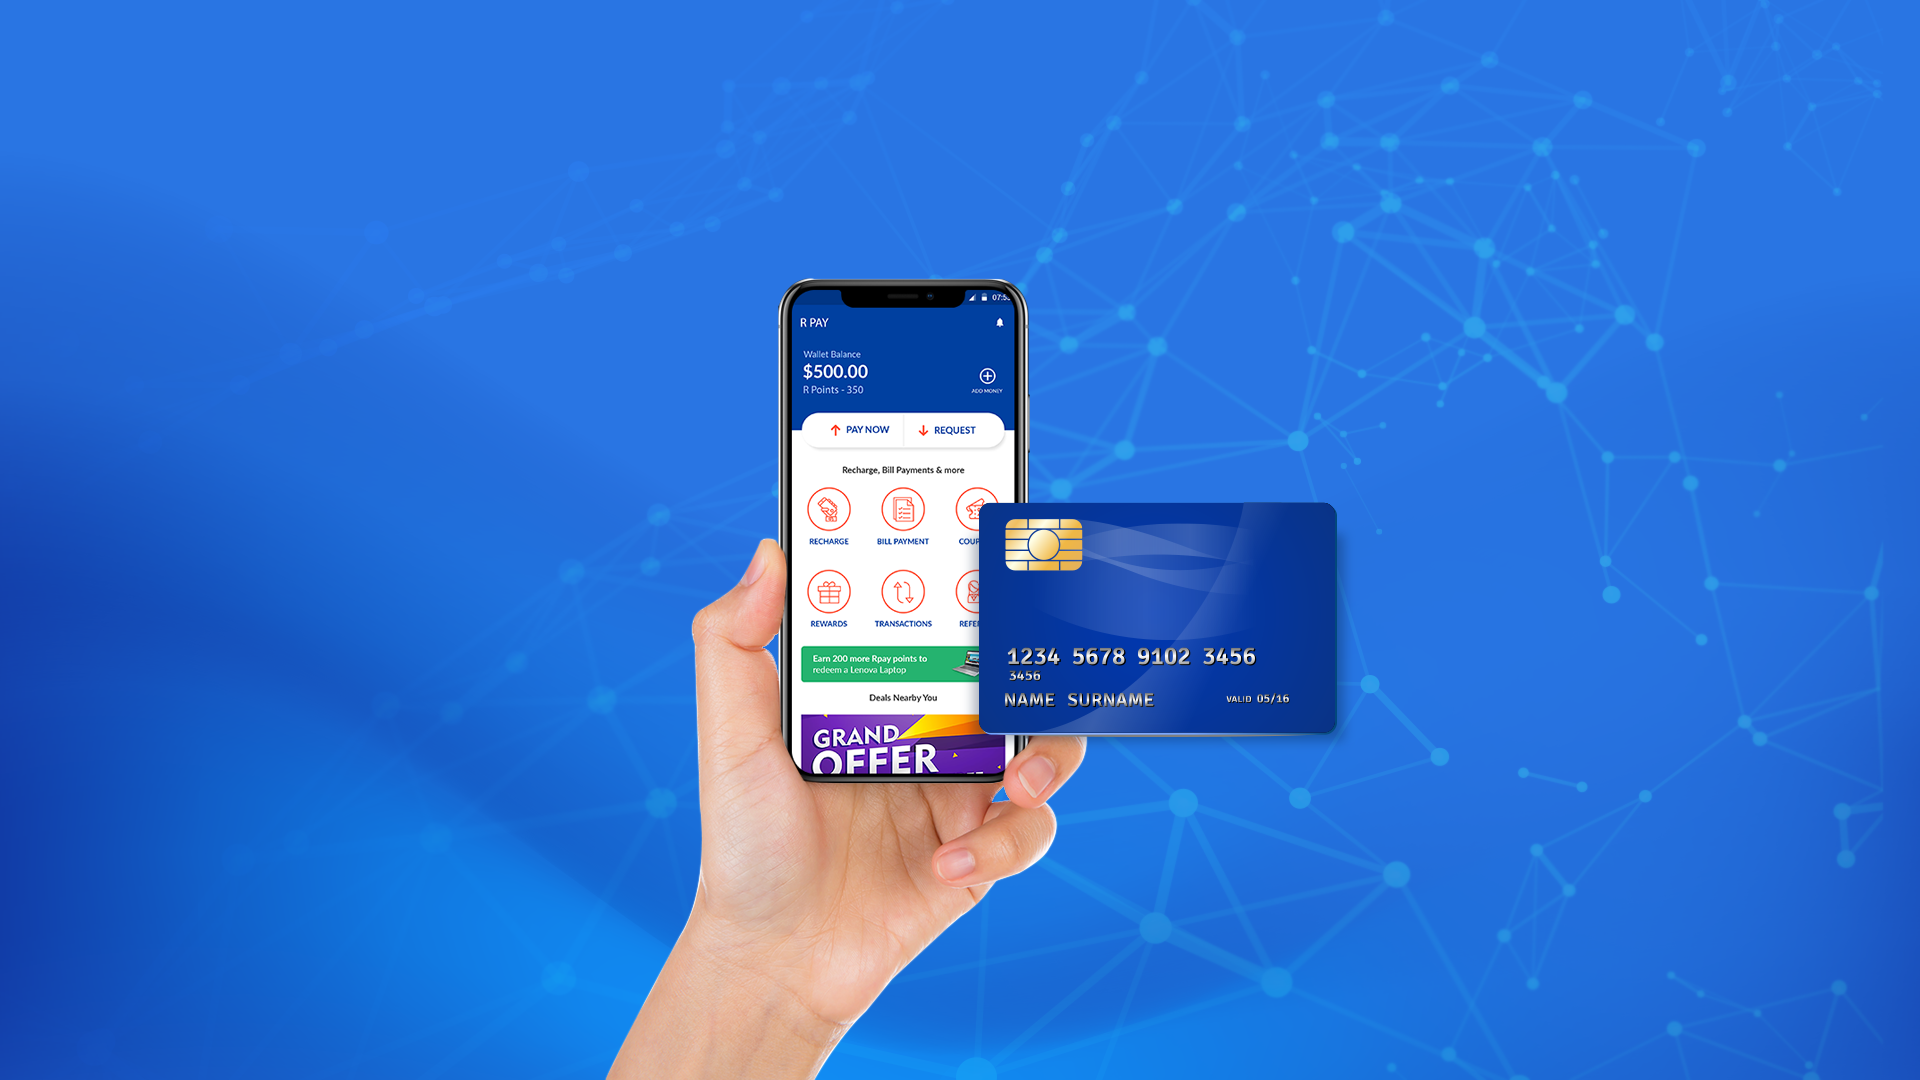 Create A Mobile Wallet App